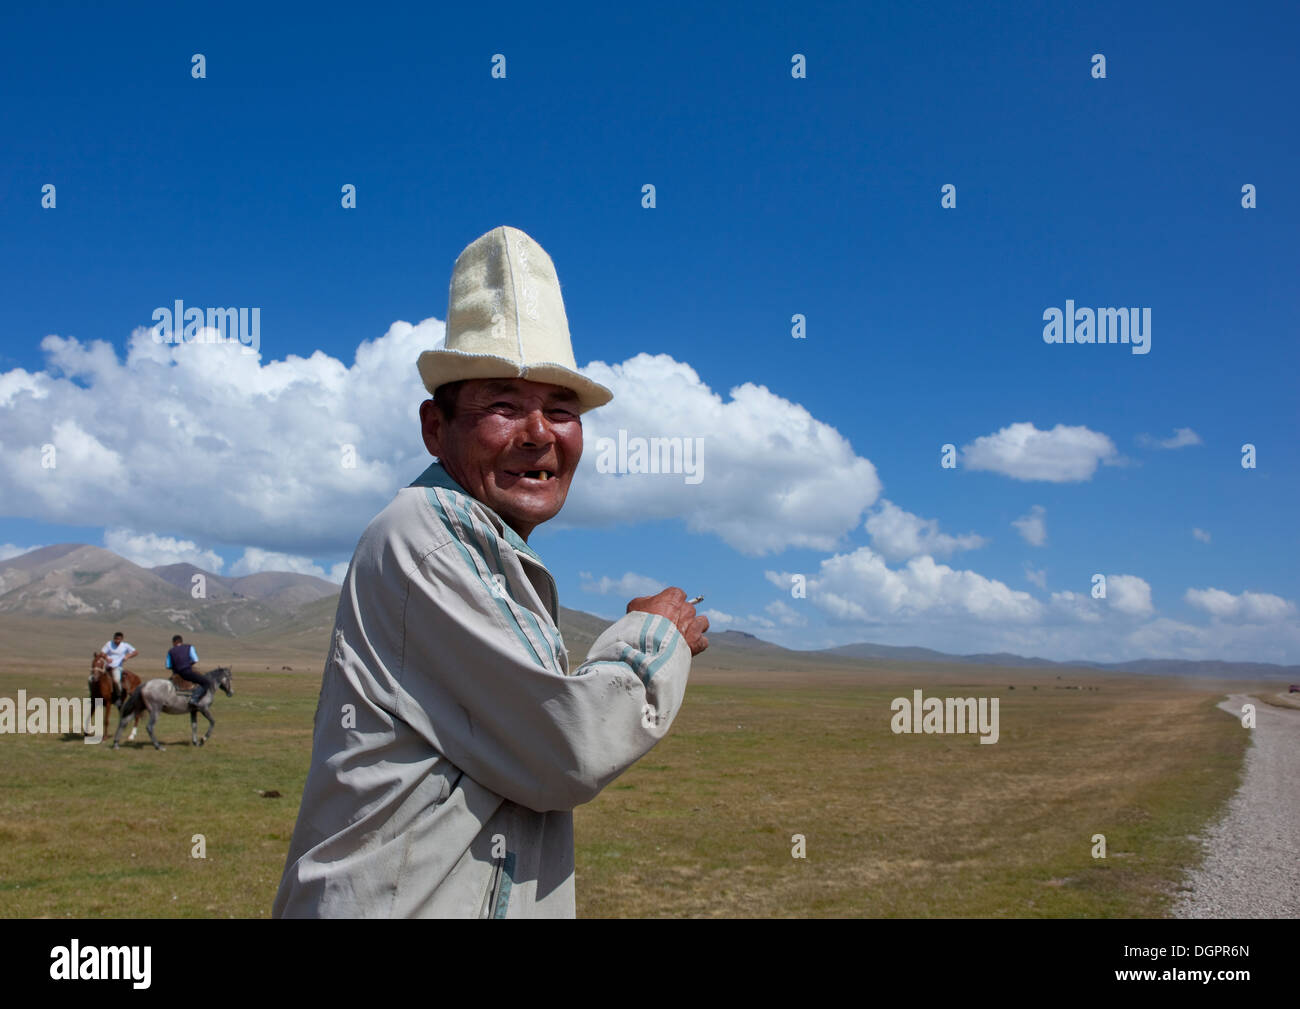 Alter Mann mit Kalpak Hut genießen das Pferdespiel, Lied Kol Seengebiet, Kirgisistan Stockfoto